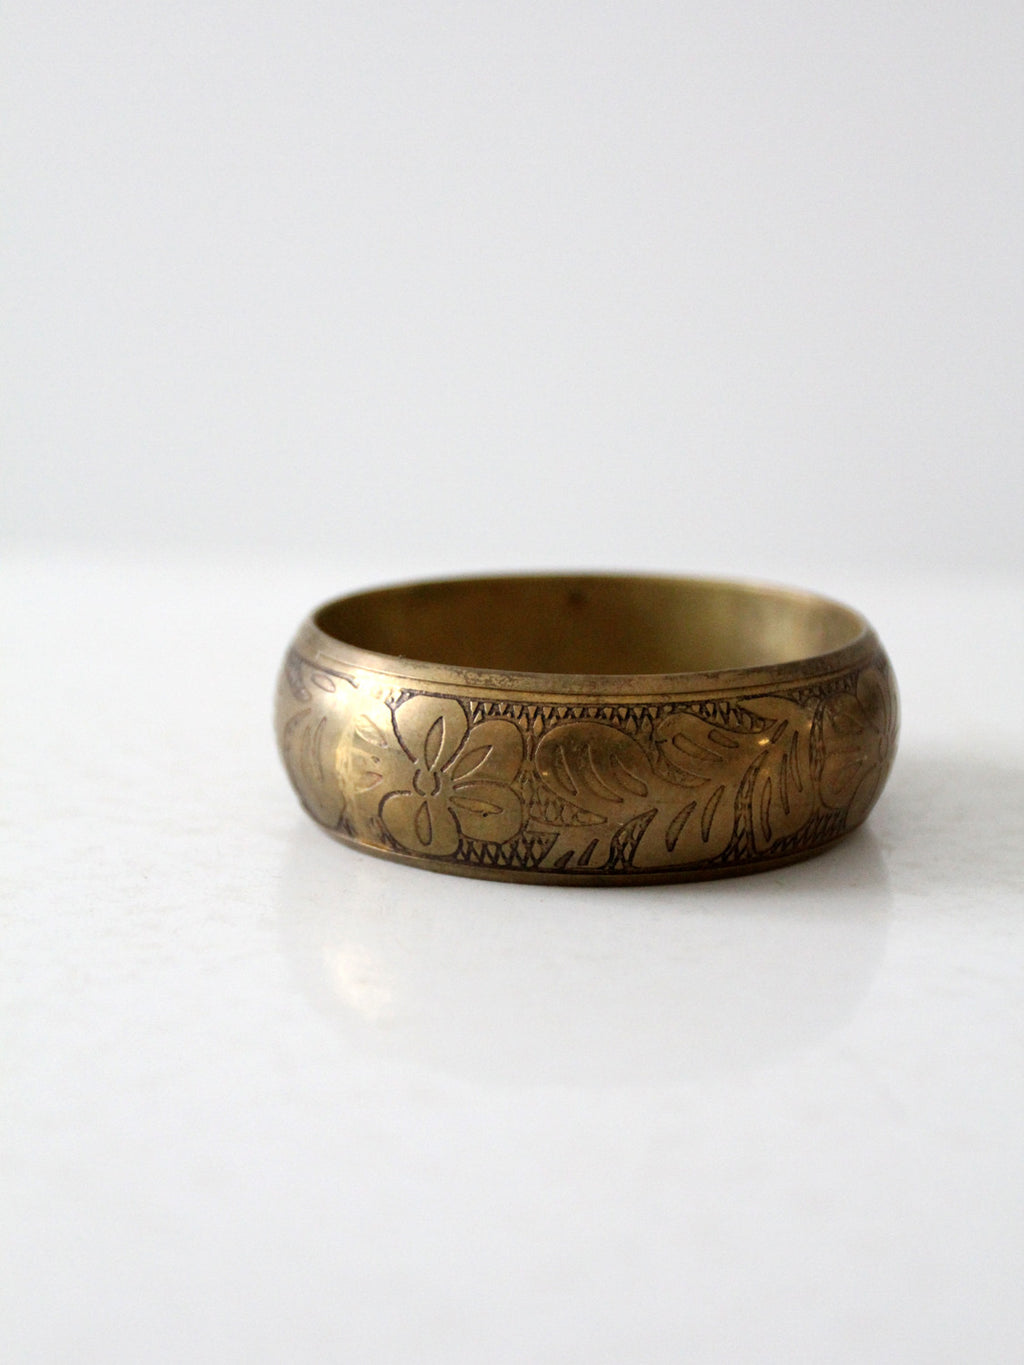 Brass bangles, Buy trendy antique brass bangles online